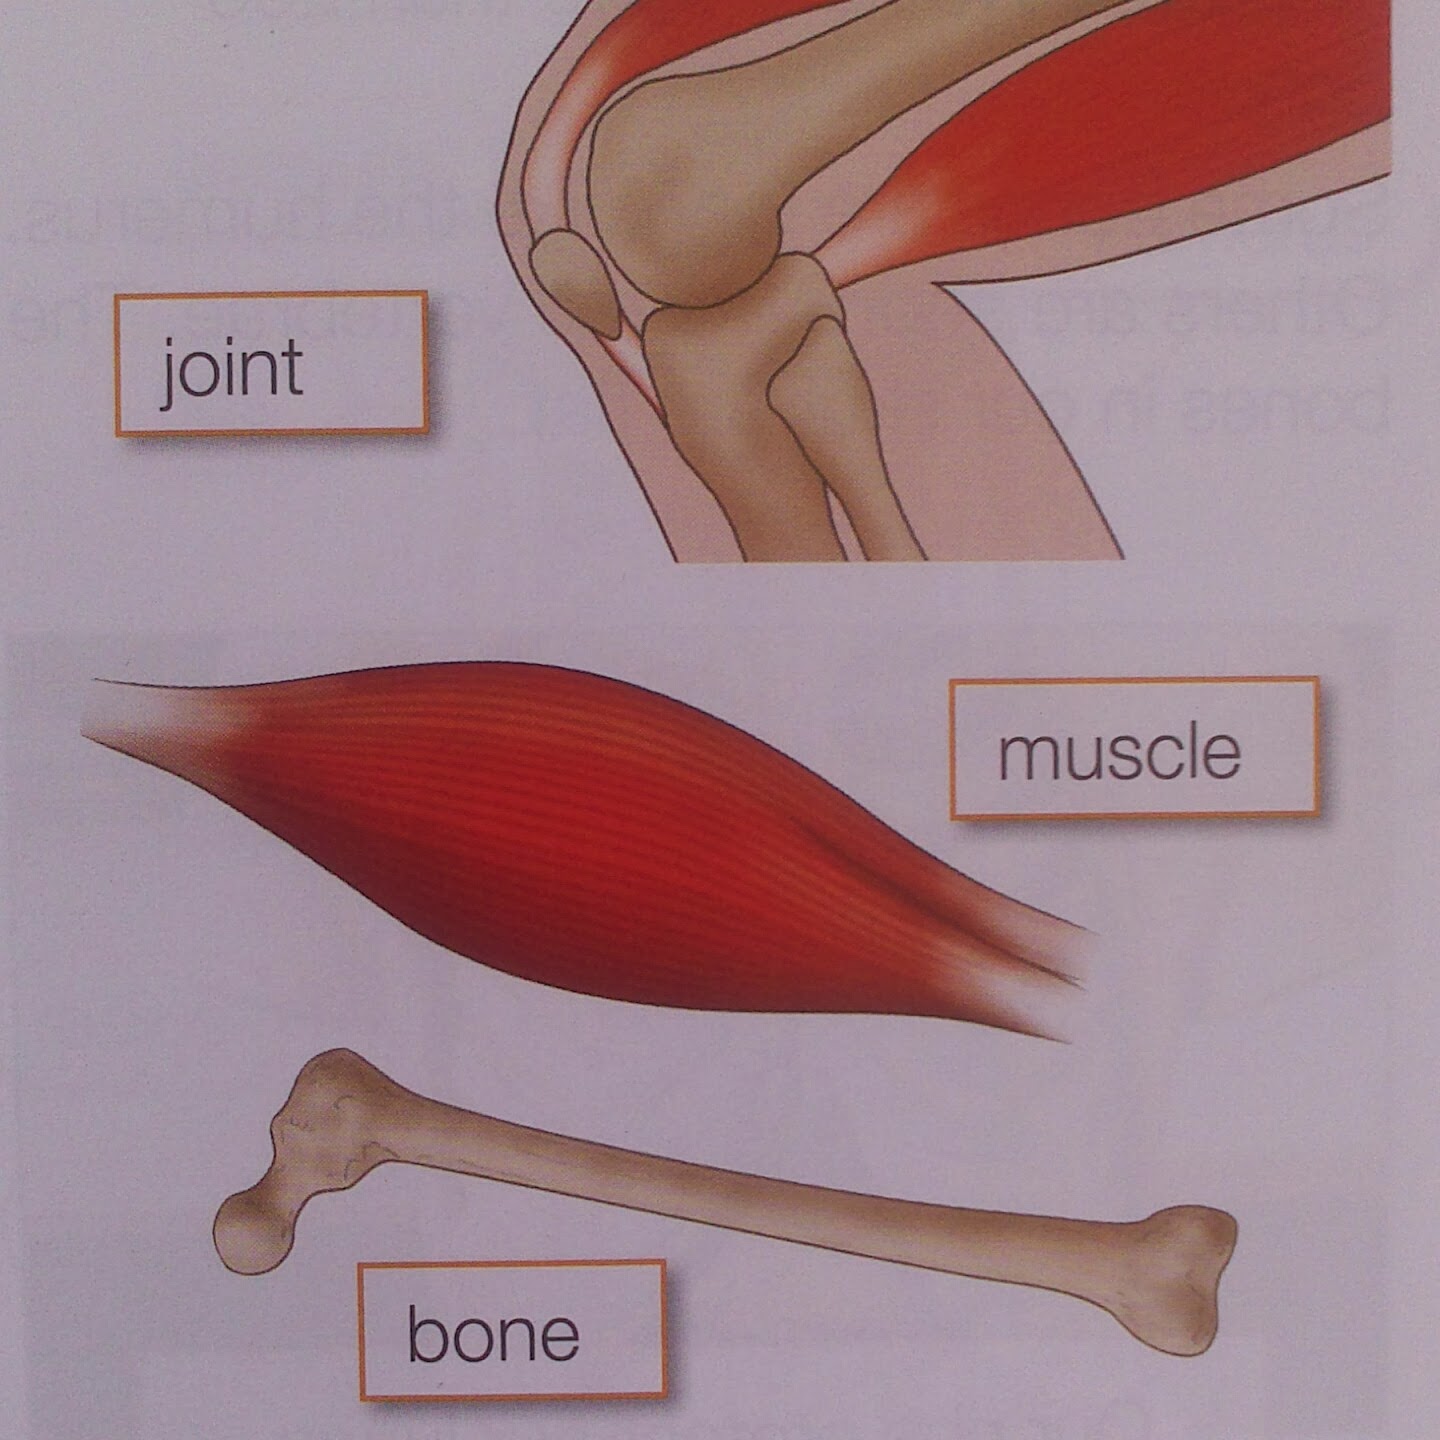 Bones and muscles. Мышцы и кости. Кость и мышца. Вместо мышцы кость. Bone Joint muscle stretching.